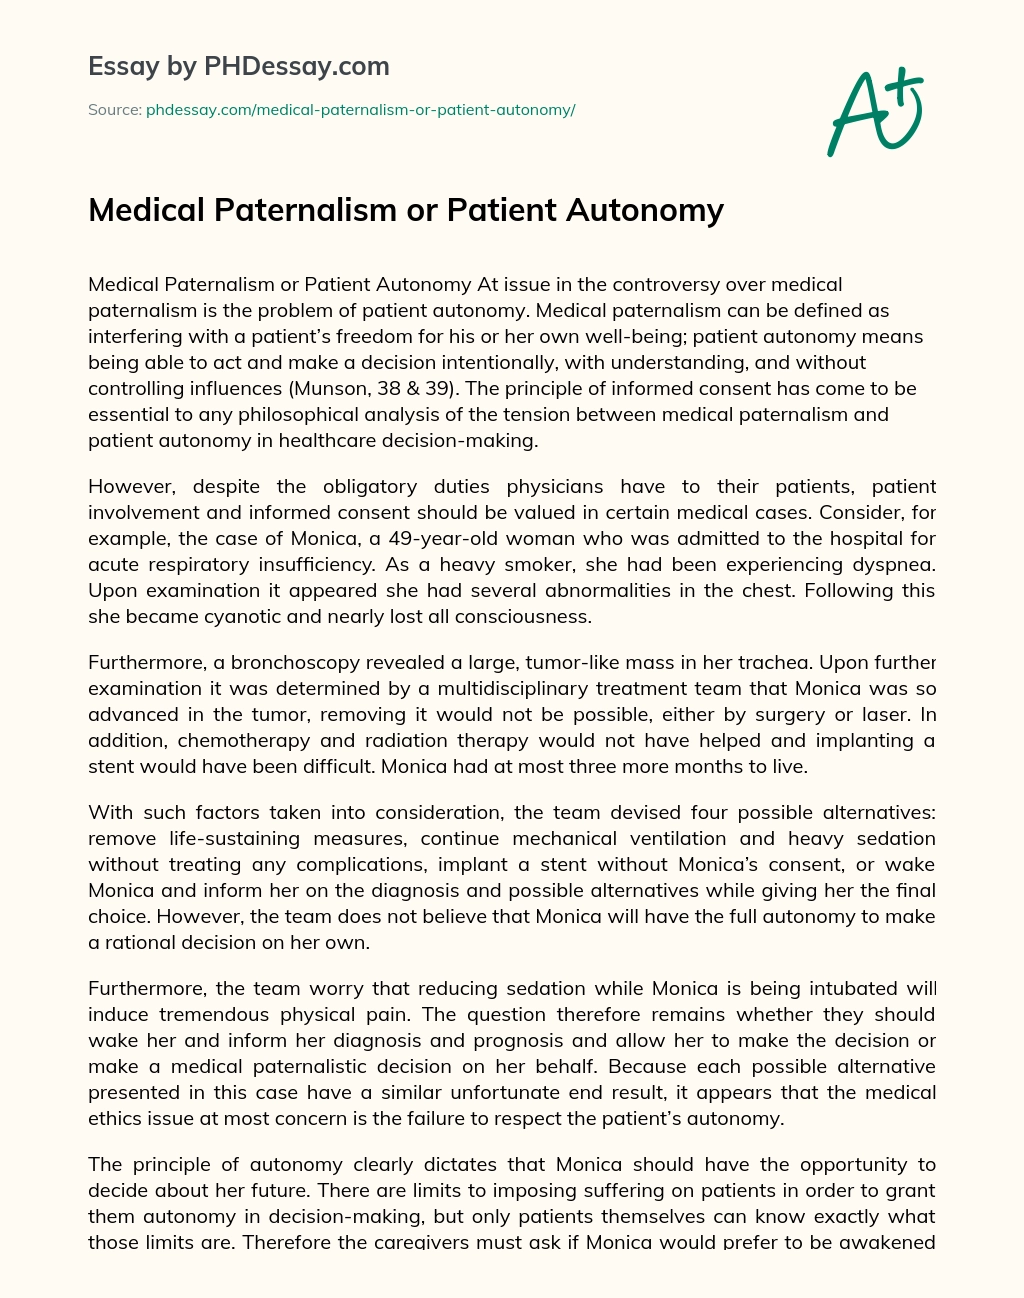 Medical Paternalism or Patient Autonomy essay